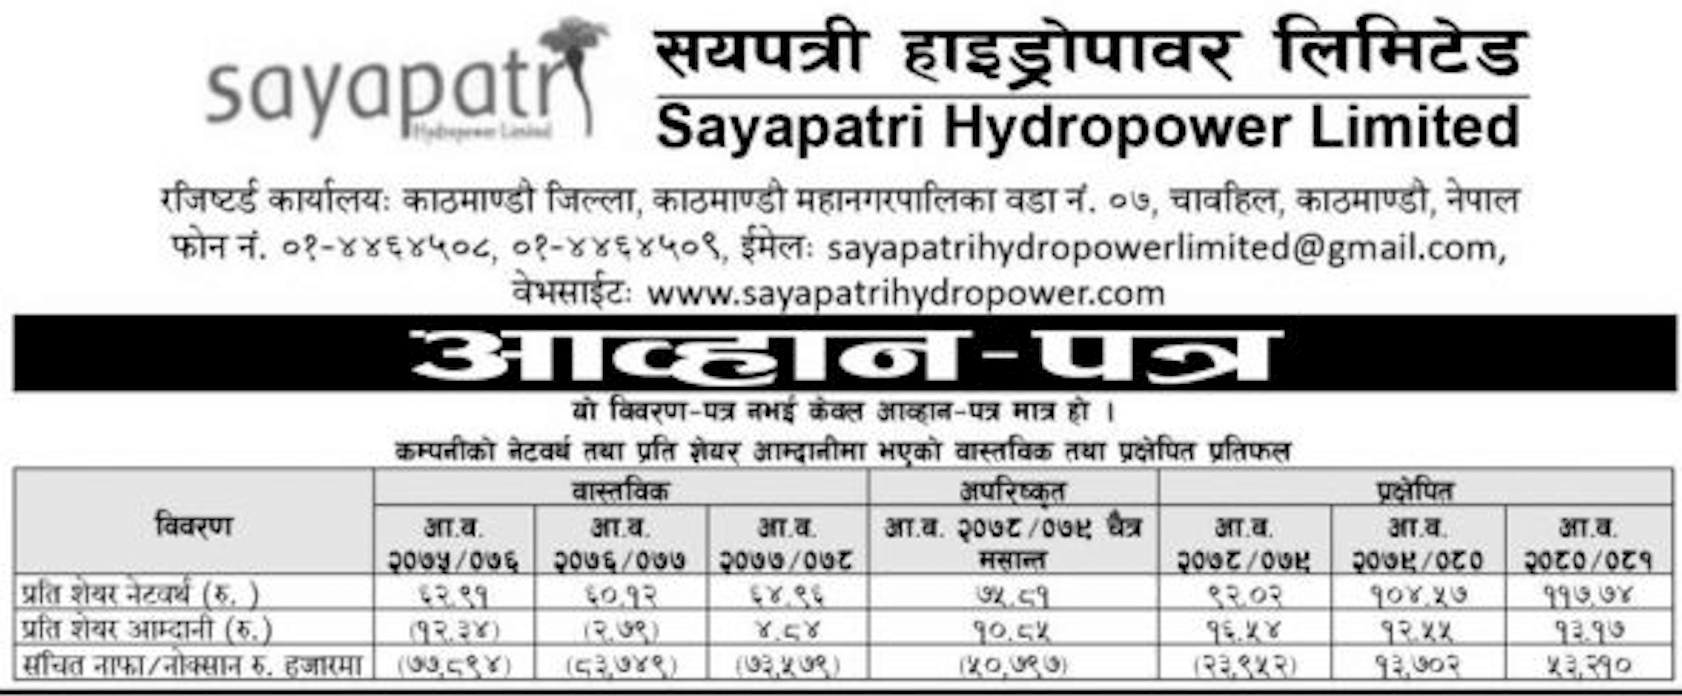 financial report of sayapatri hydropower